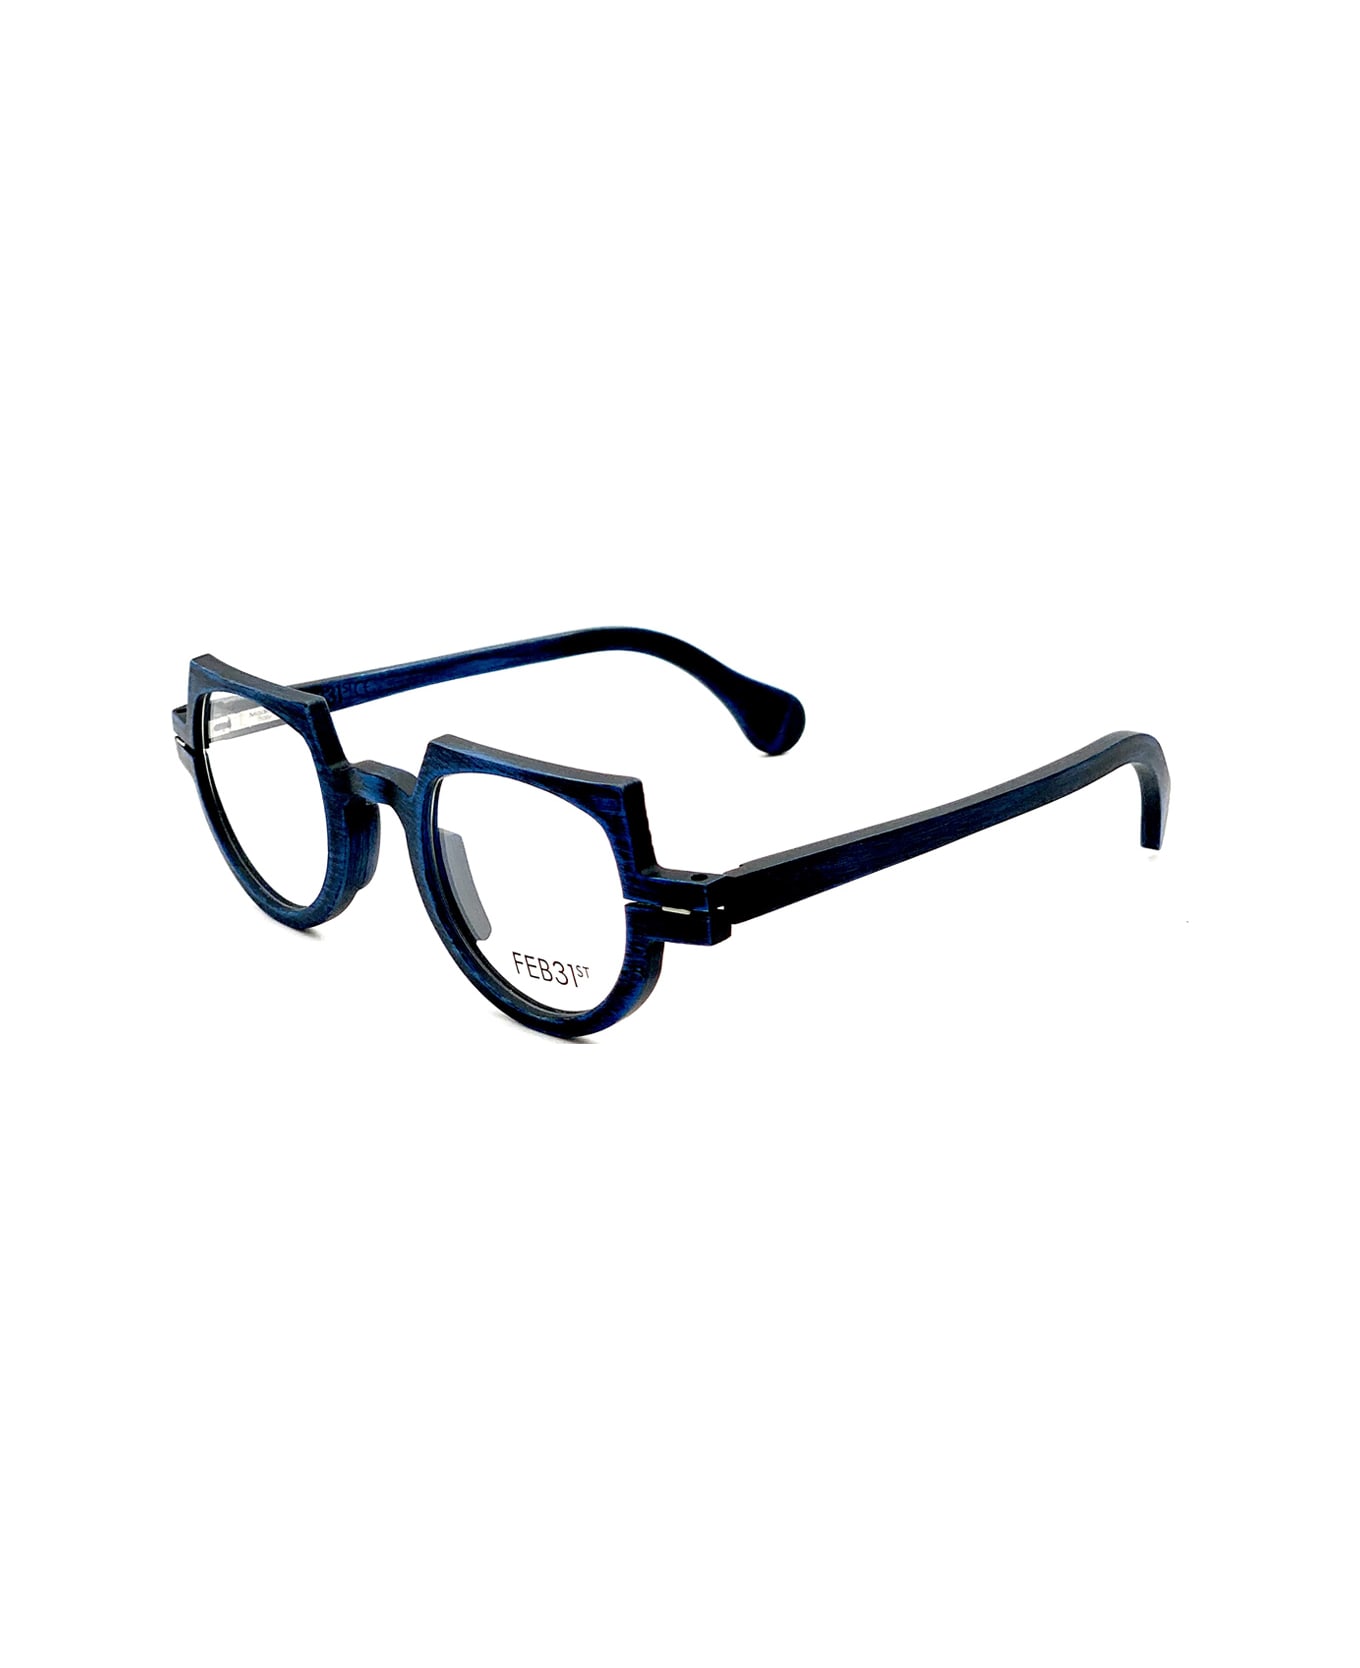 Feb31st Lewis Blu Glasses - Blu